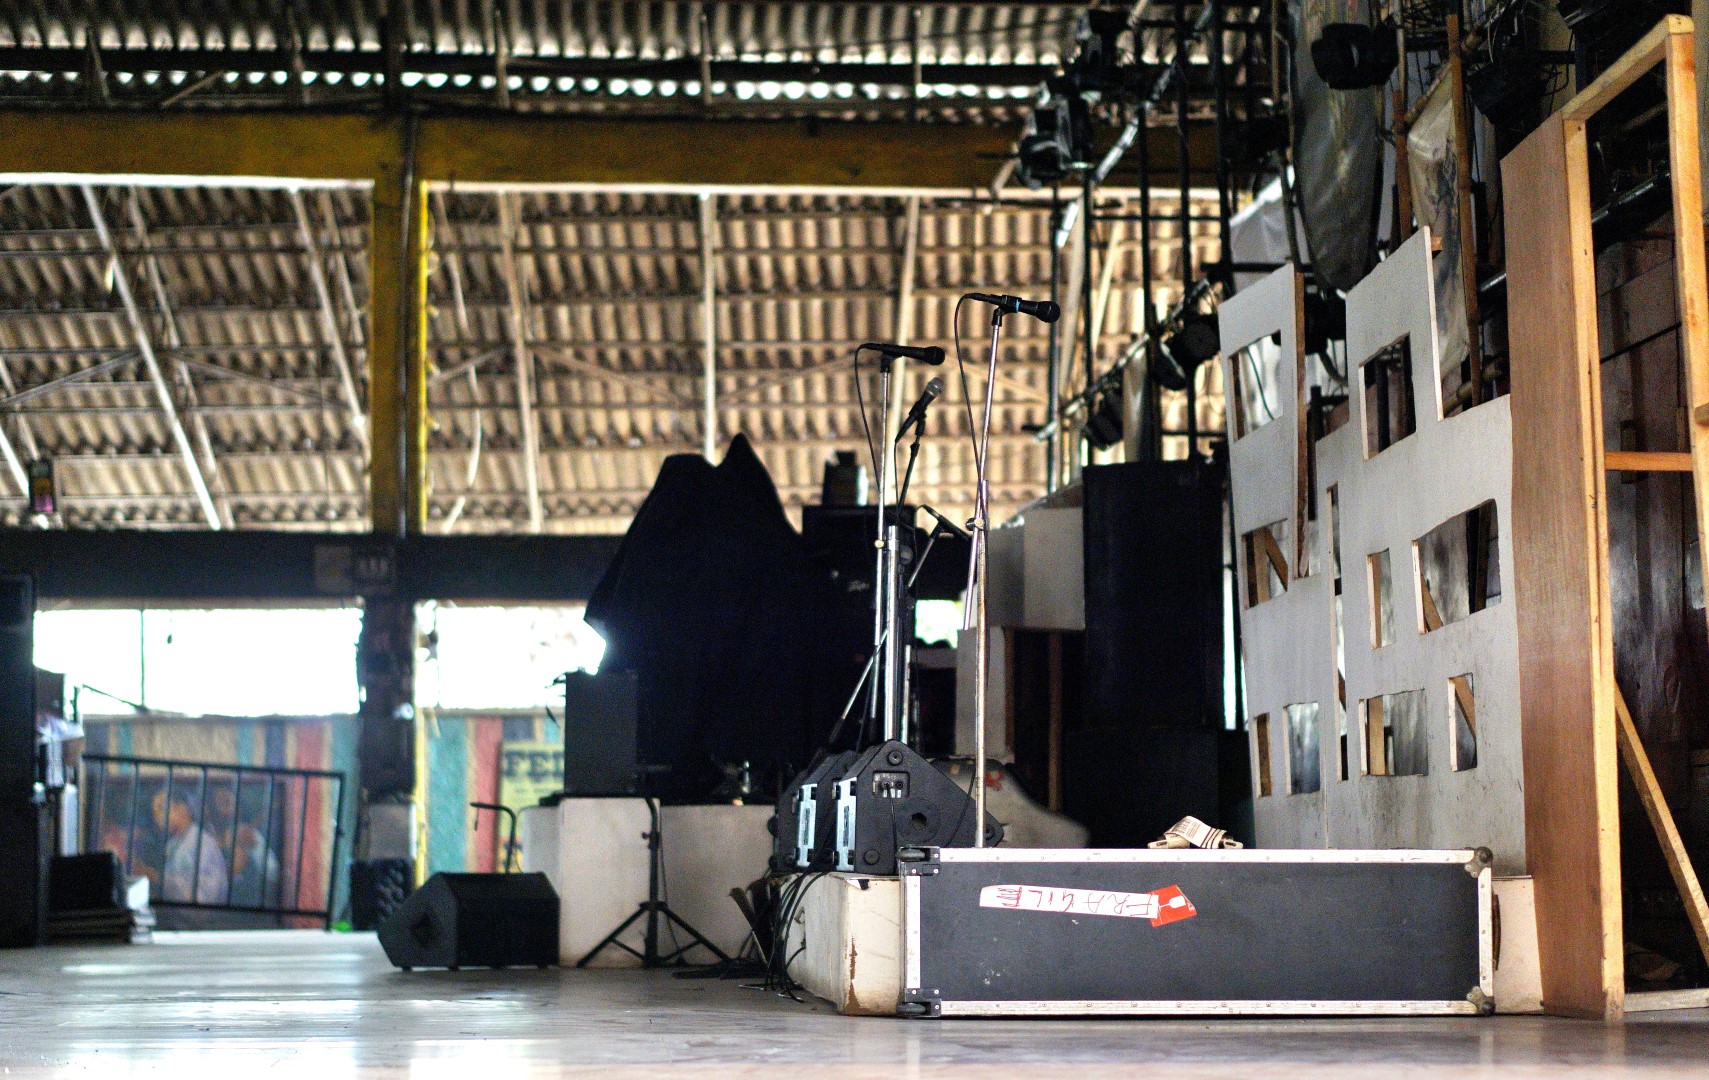 The stage at Fela's shrine in Ikeja